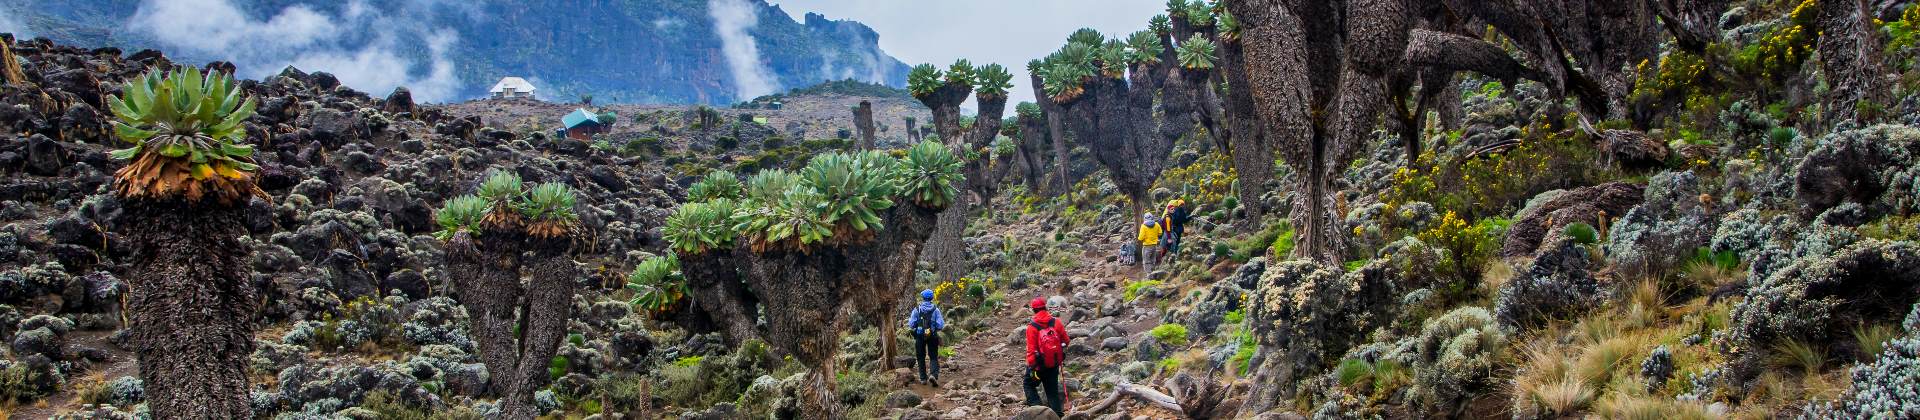 hiking op de Kilimanjaro